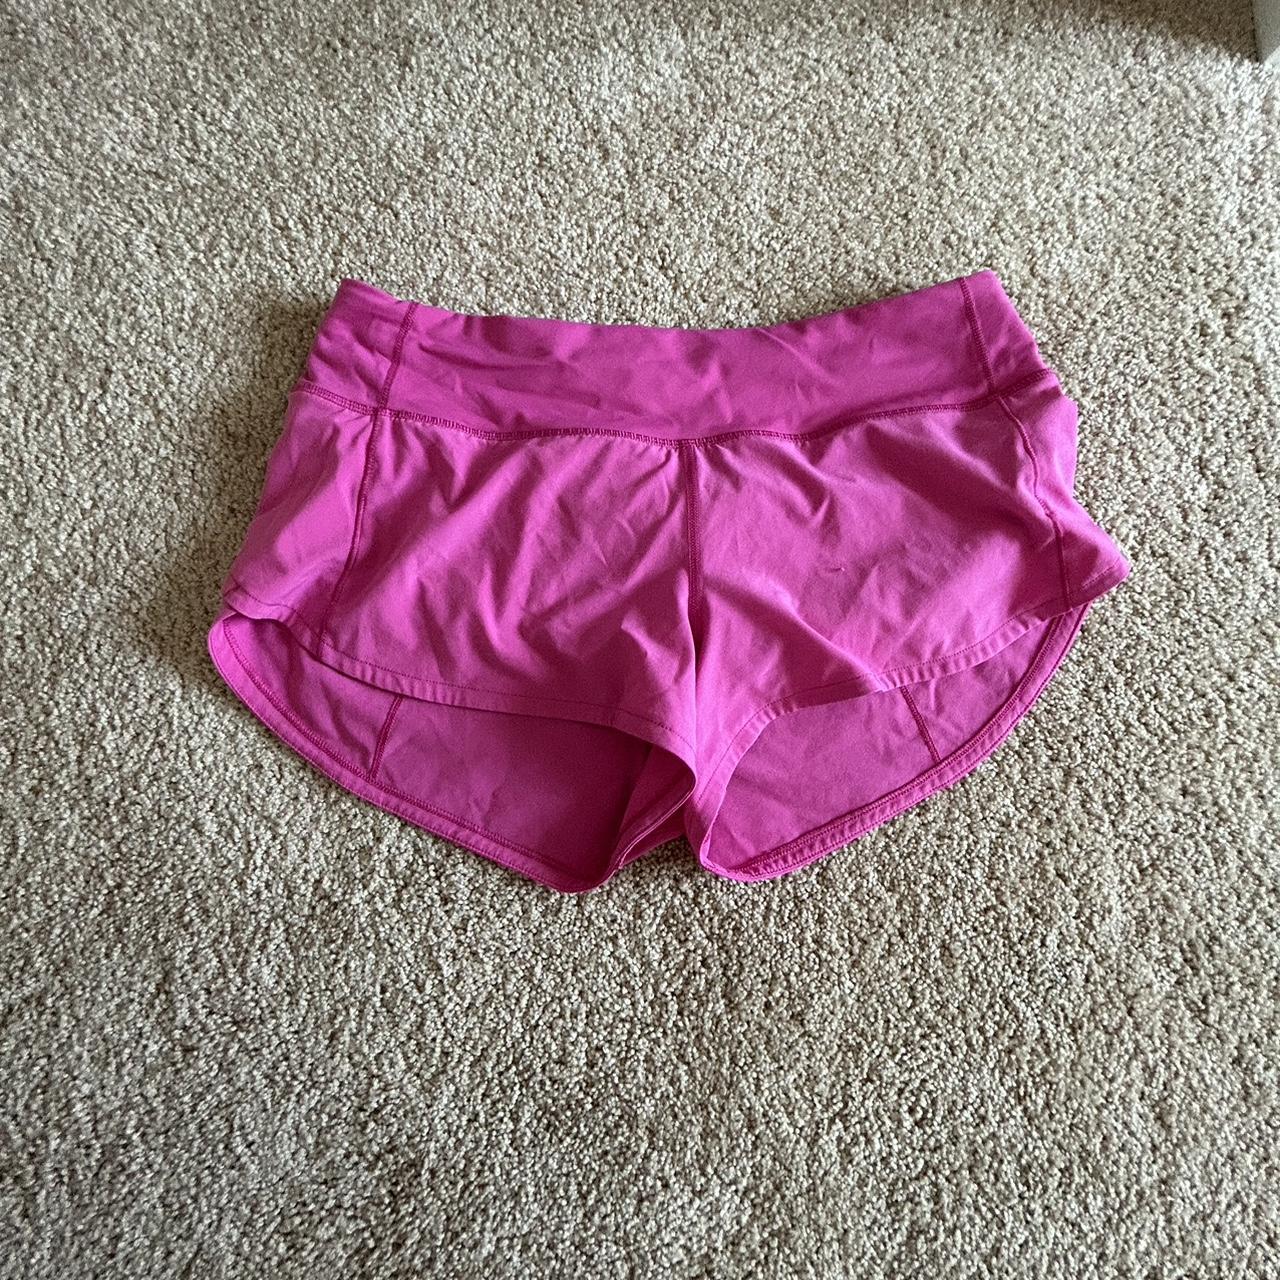 sonic pink hotty hot Lululemon shorts 2.5 in - Depop